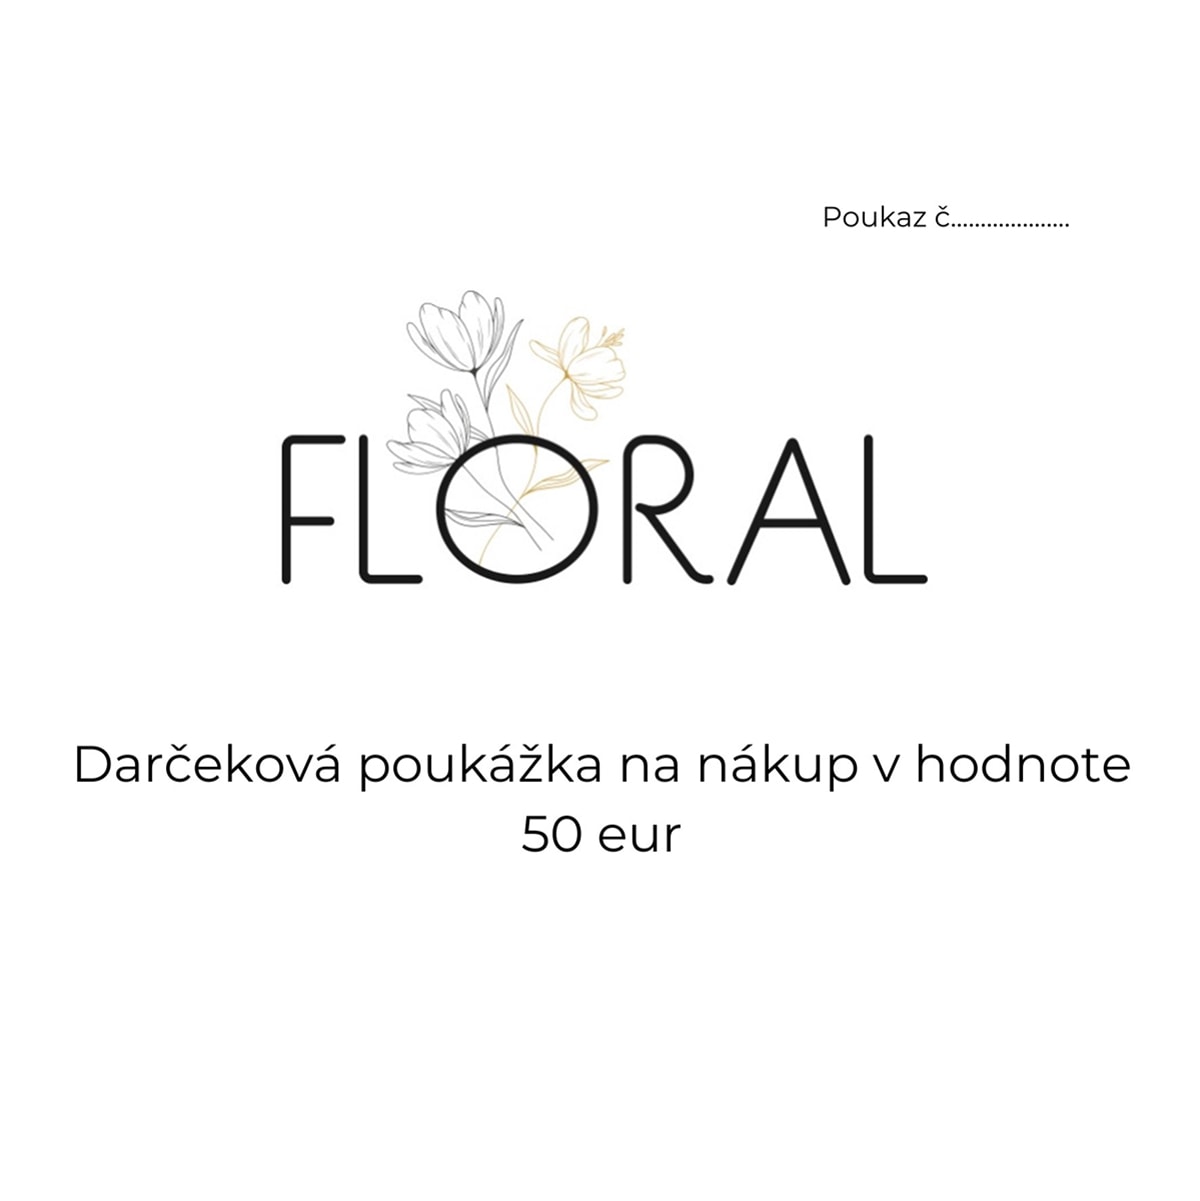 Darcekova-poukazka-na-nakup-kvetov-kytic-obrazov-dekoracii-v-hodnote-50eur